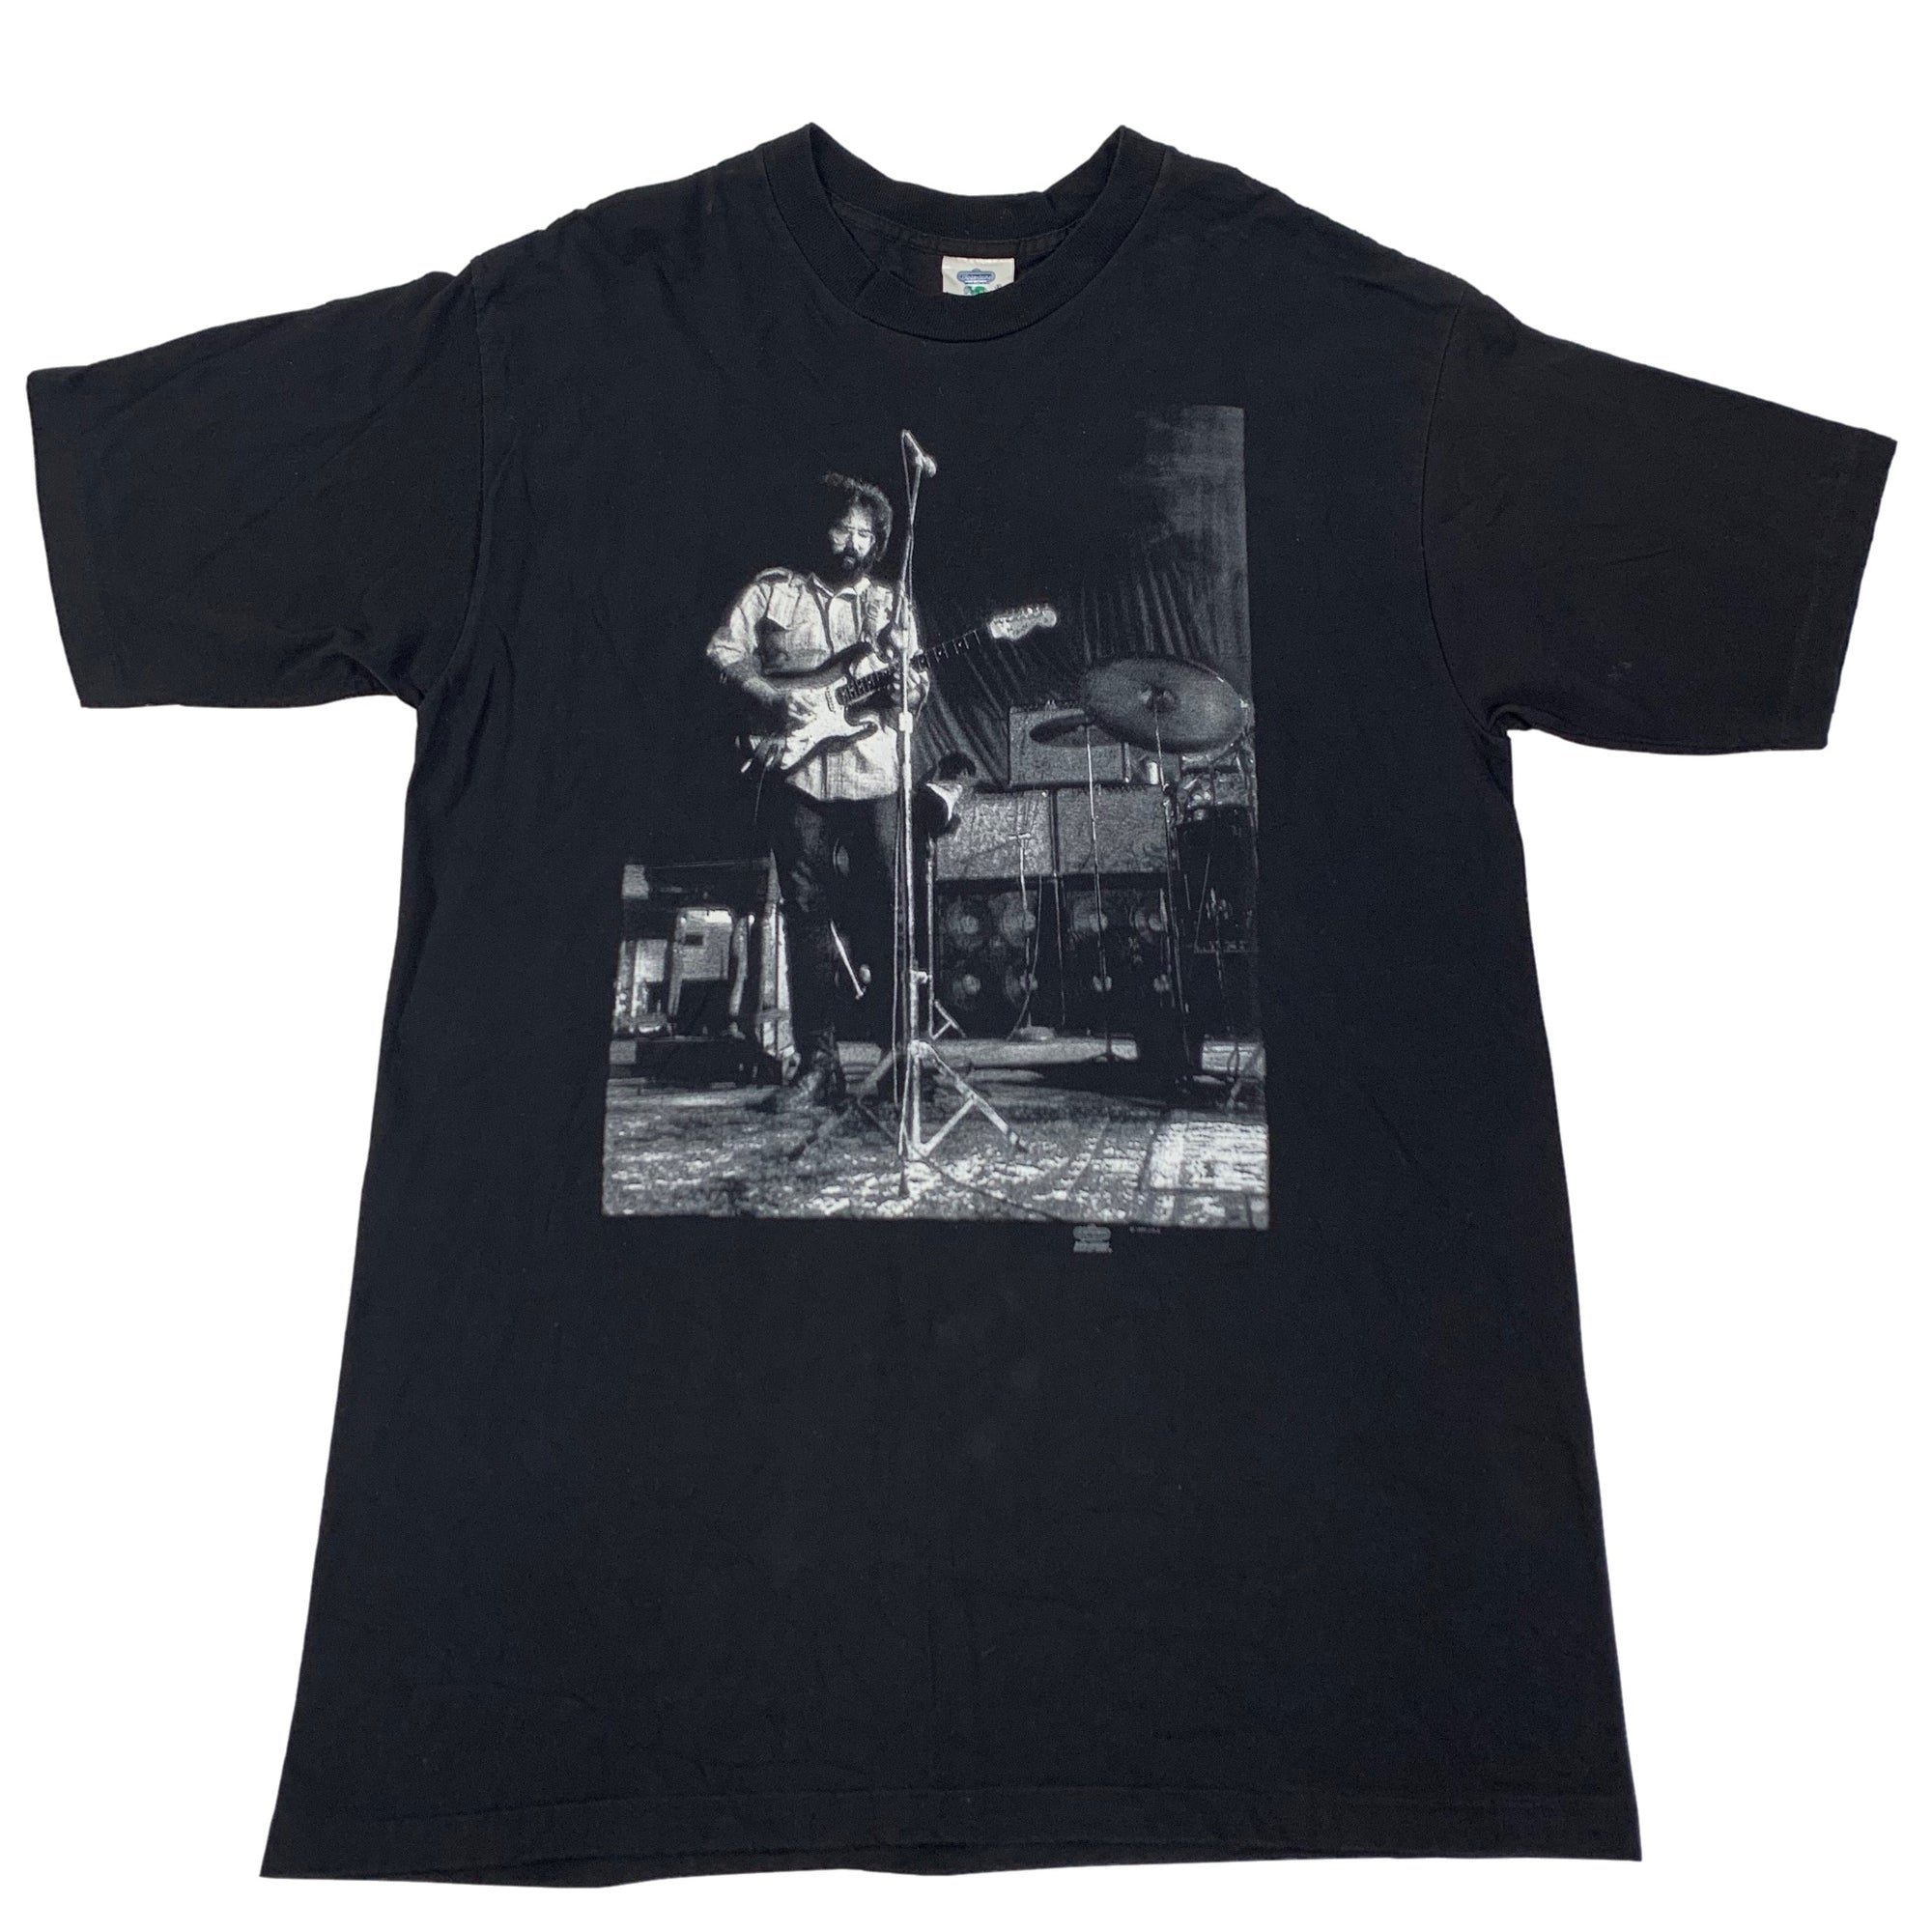 Vintage Jerry Garcia "The Jerry Garcia Band" T-Shirt - jointcustodydc